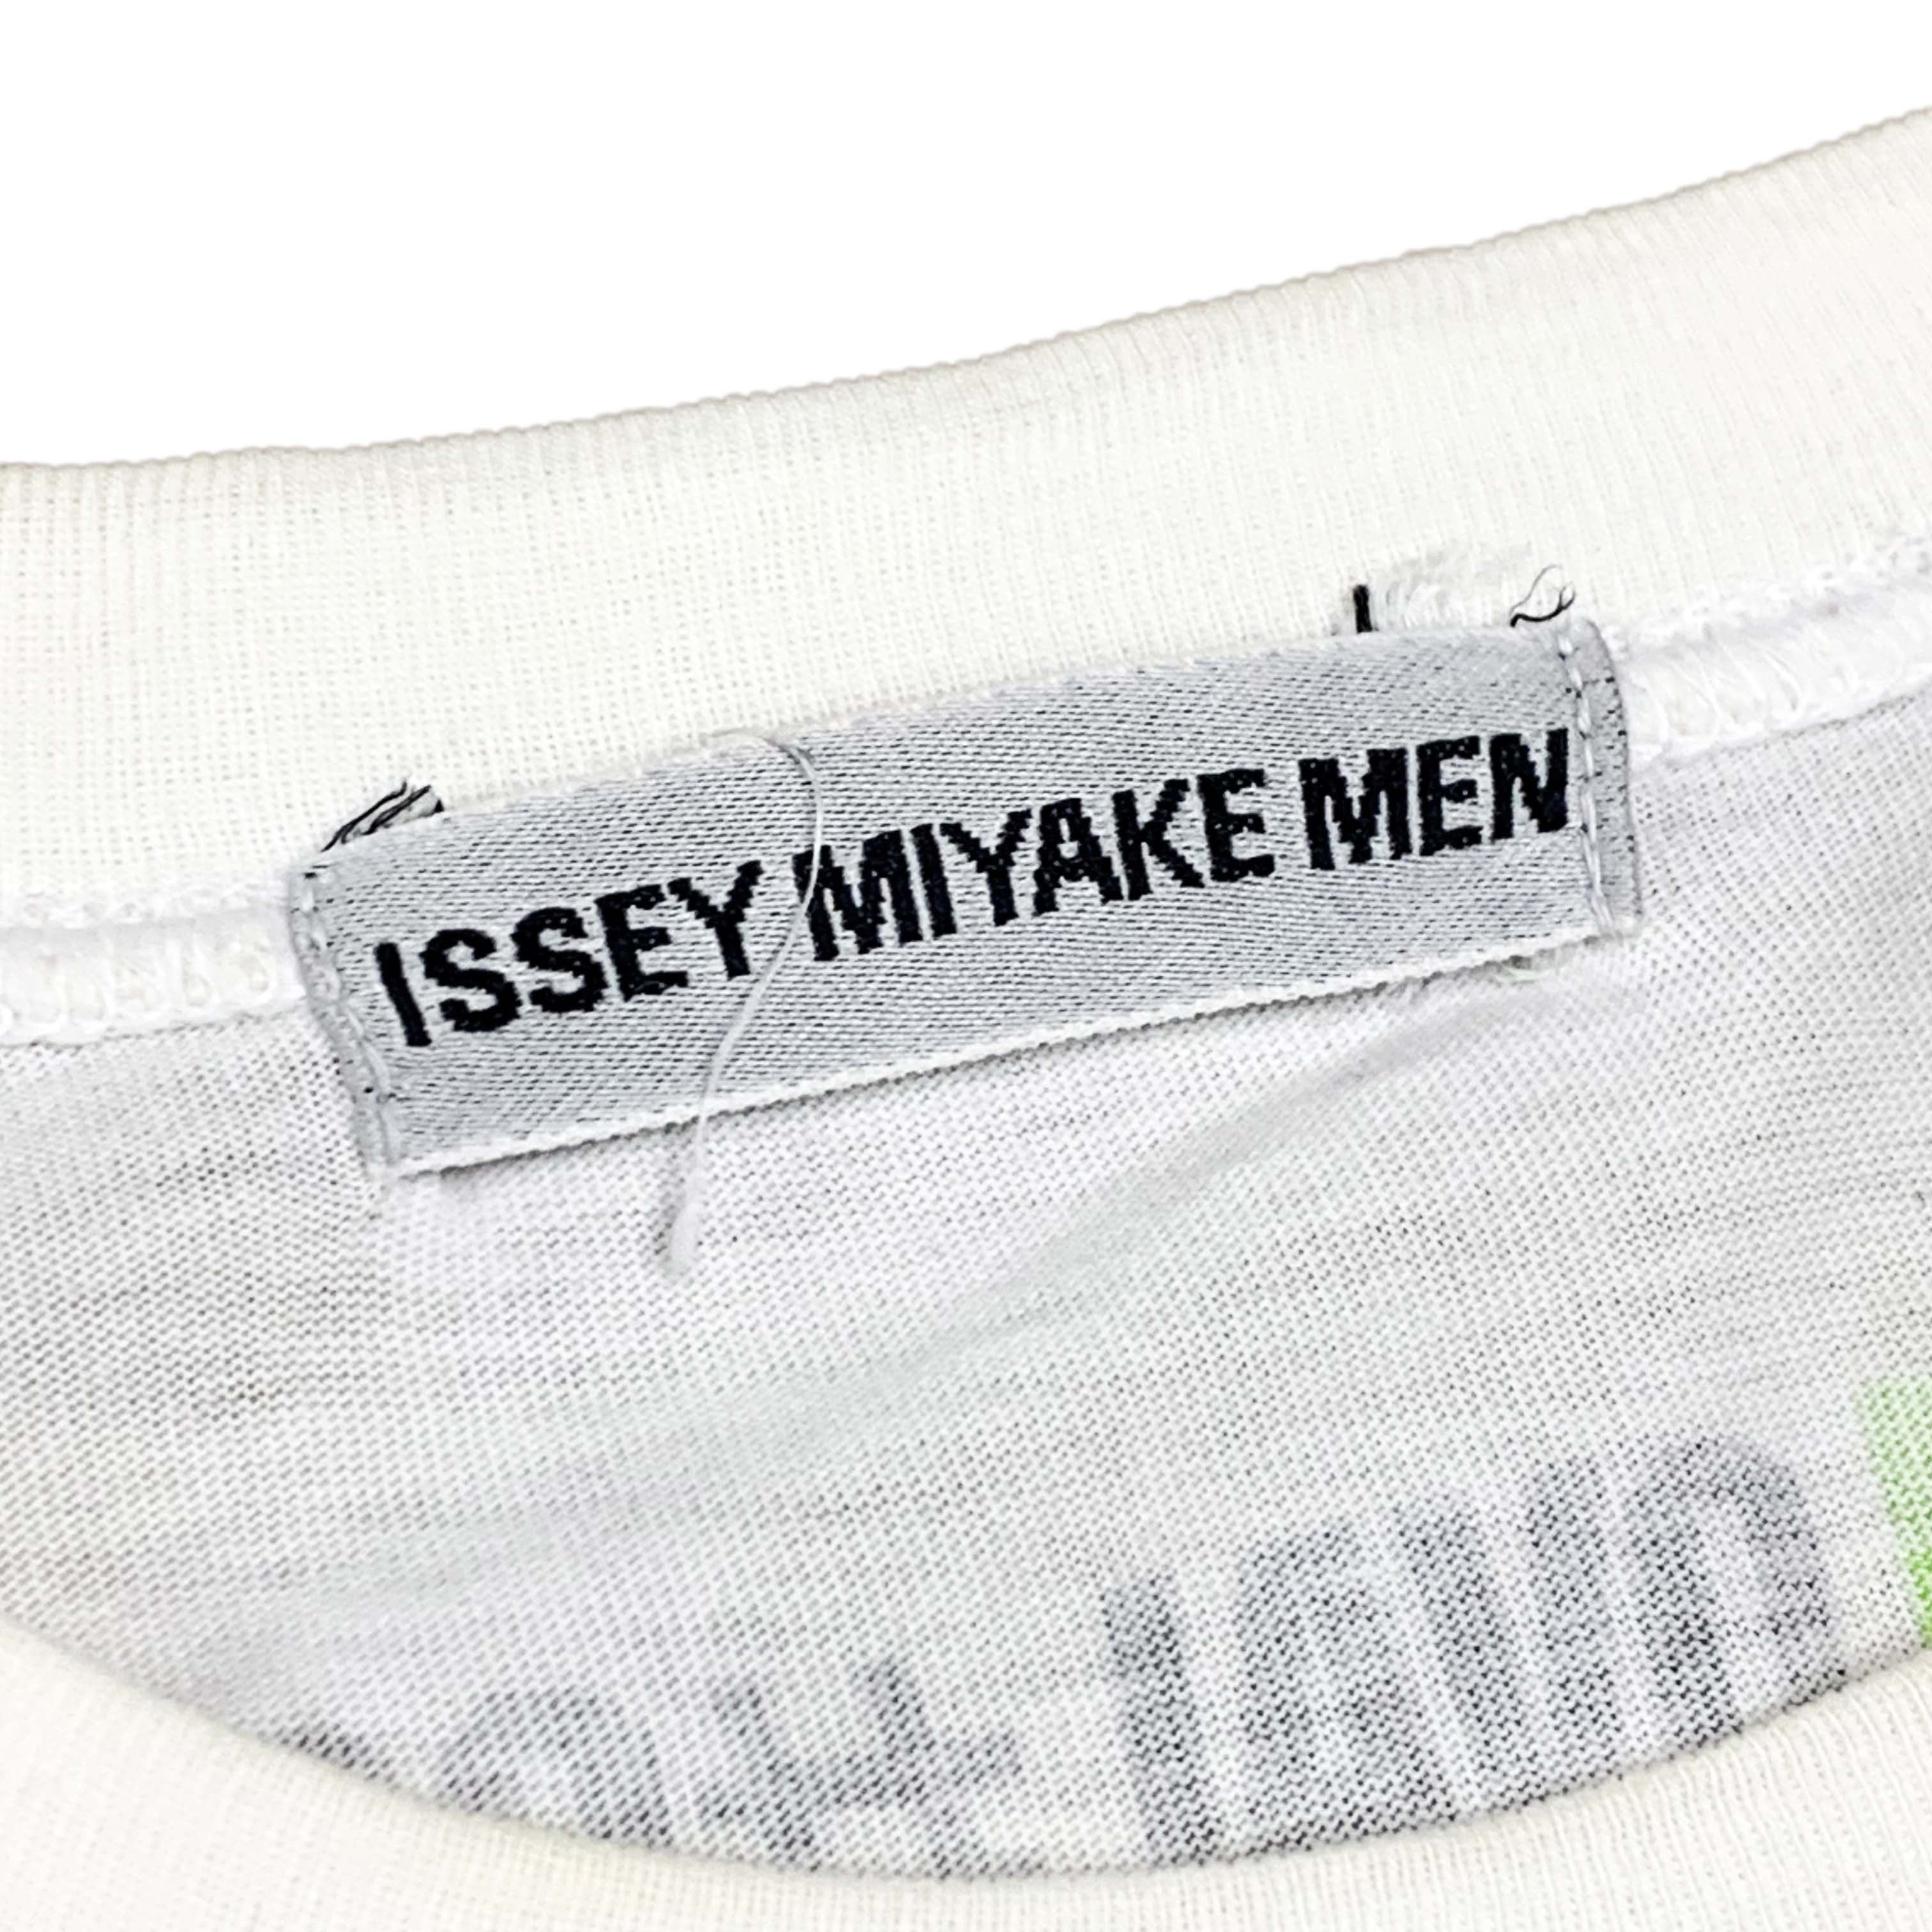 Issey Miyake - SS99 OVAL #2: Shrunk Cotton T-Shirt Feat. Nobukazu Takemura - 6